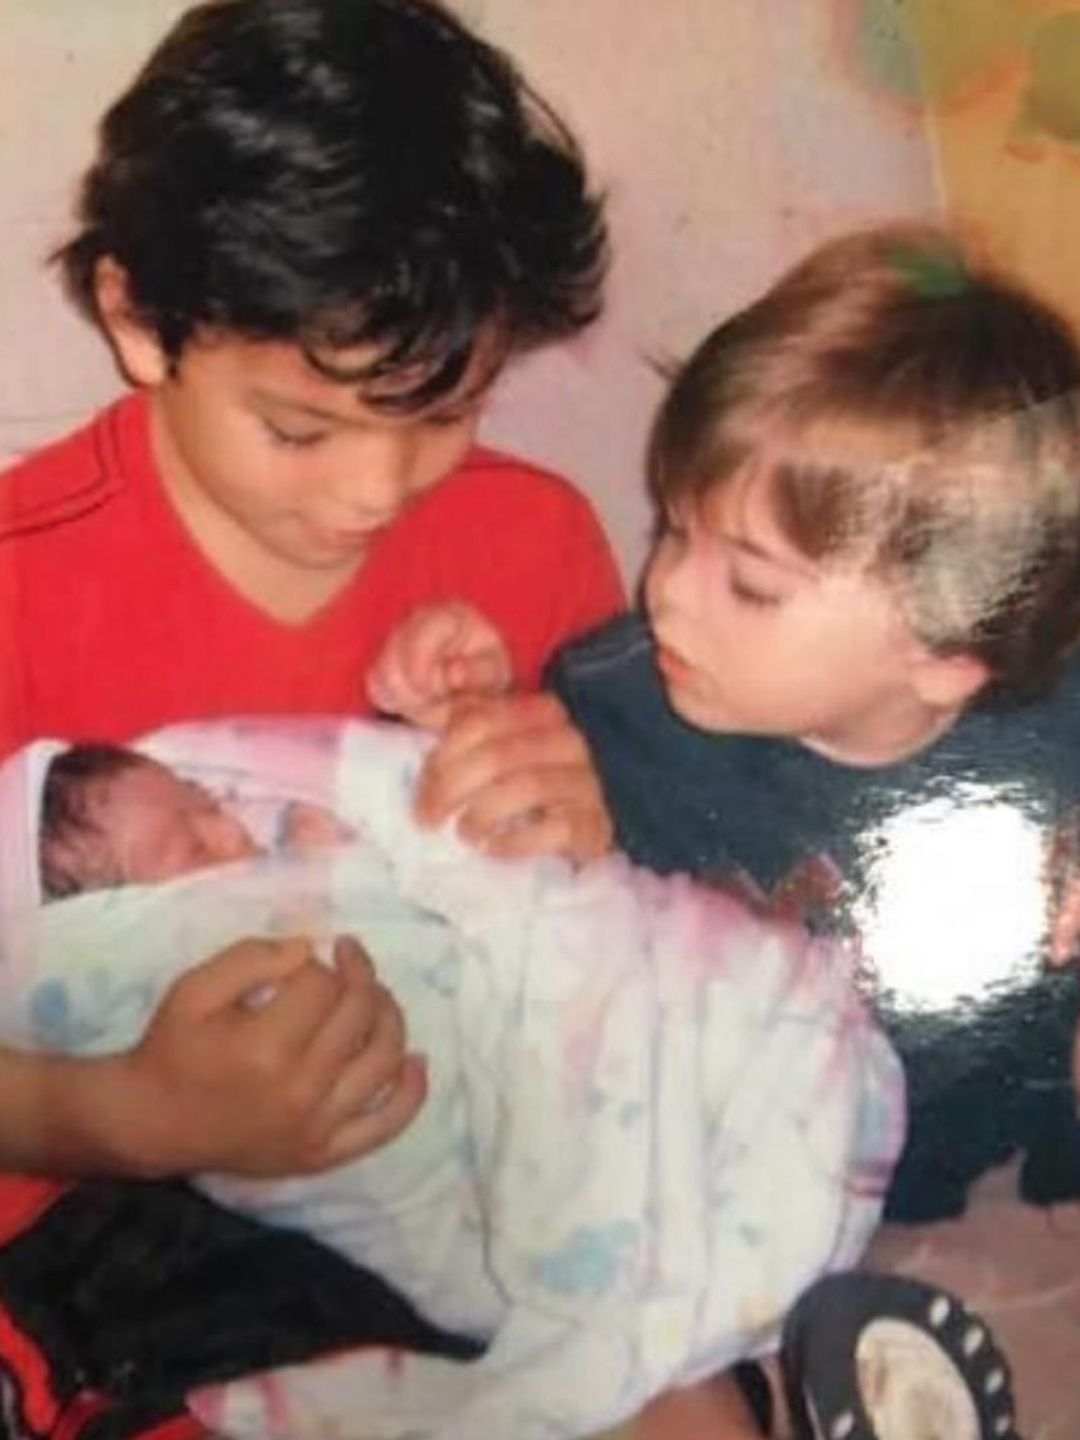 Lauren Sanchez shares a throwback photo of her three kids, Nikko, Evan, and Ella